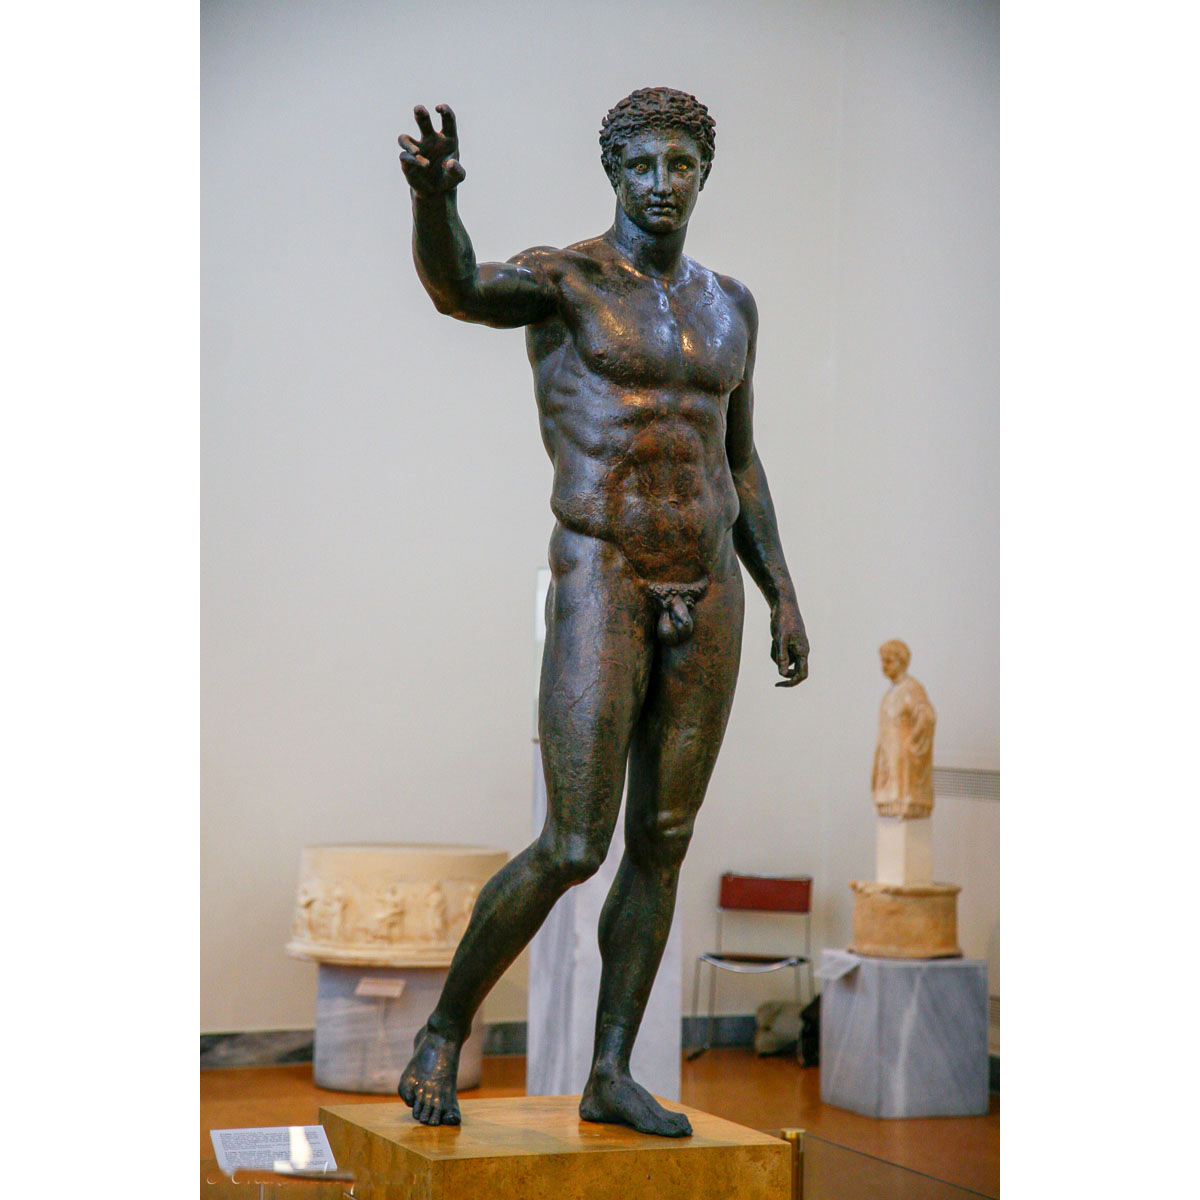 Western naked man bronze statue